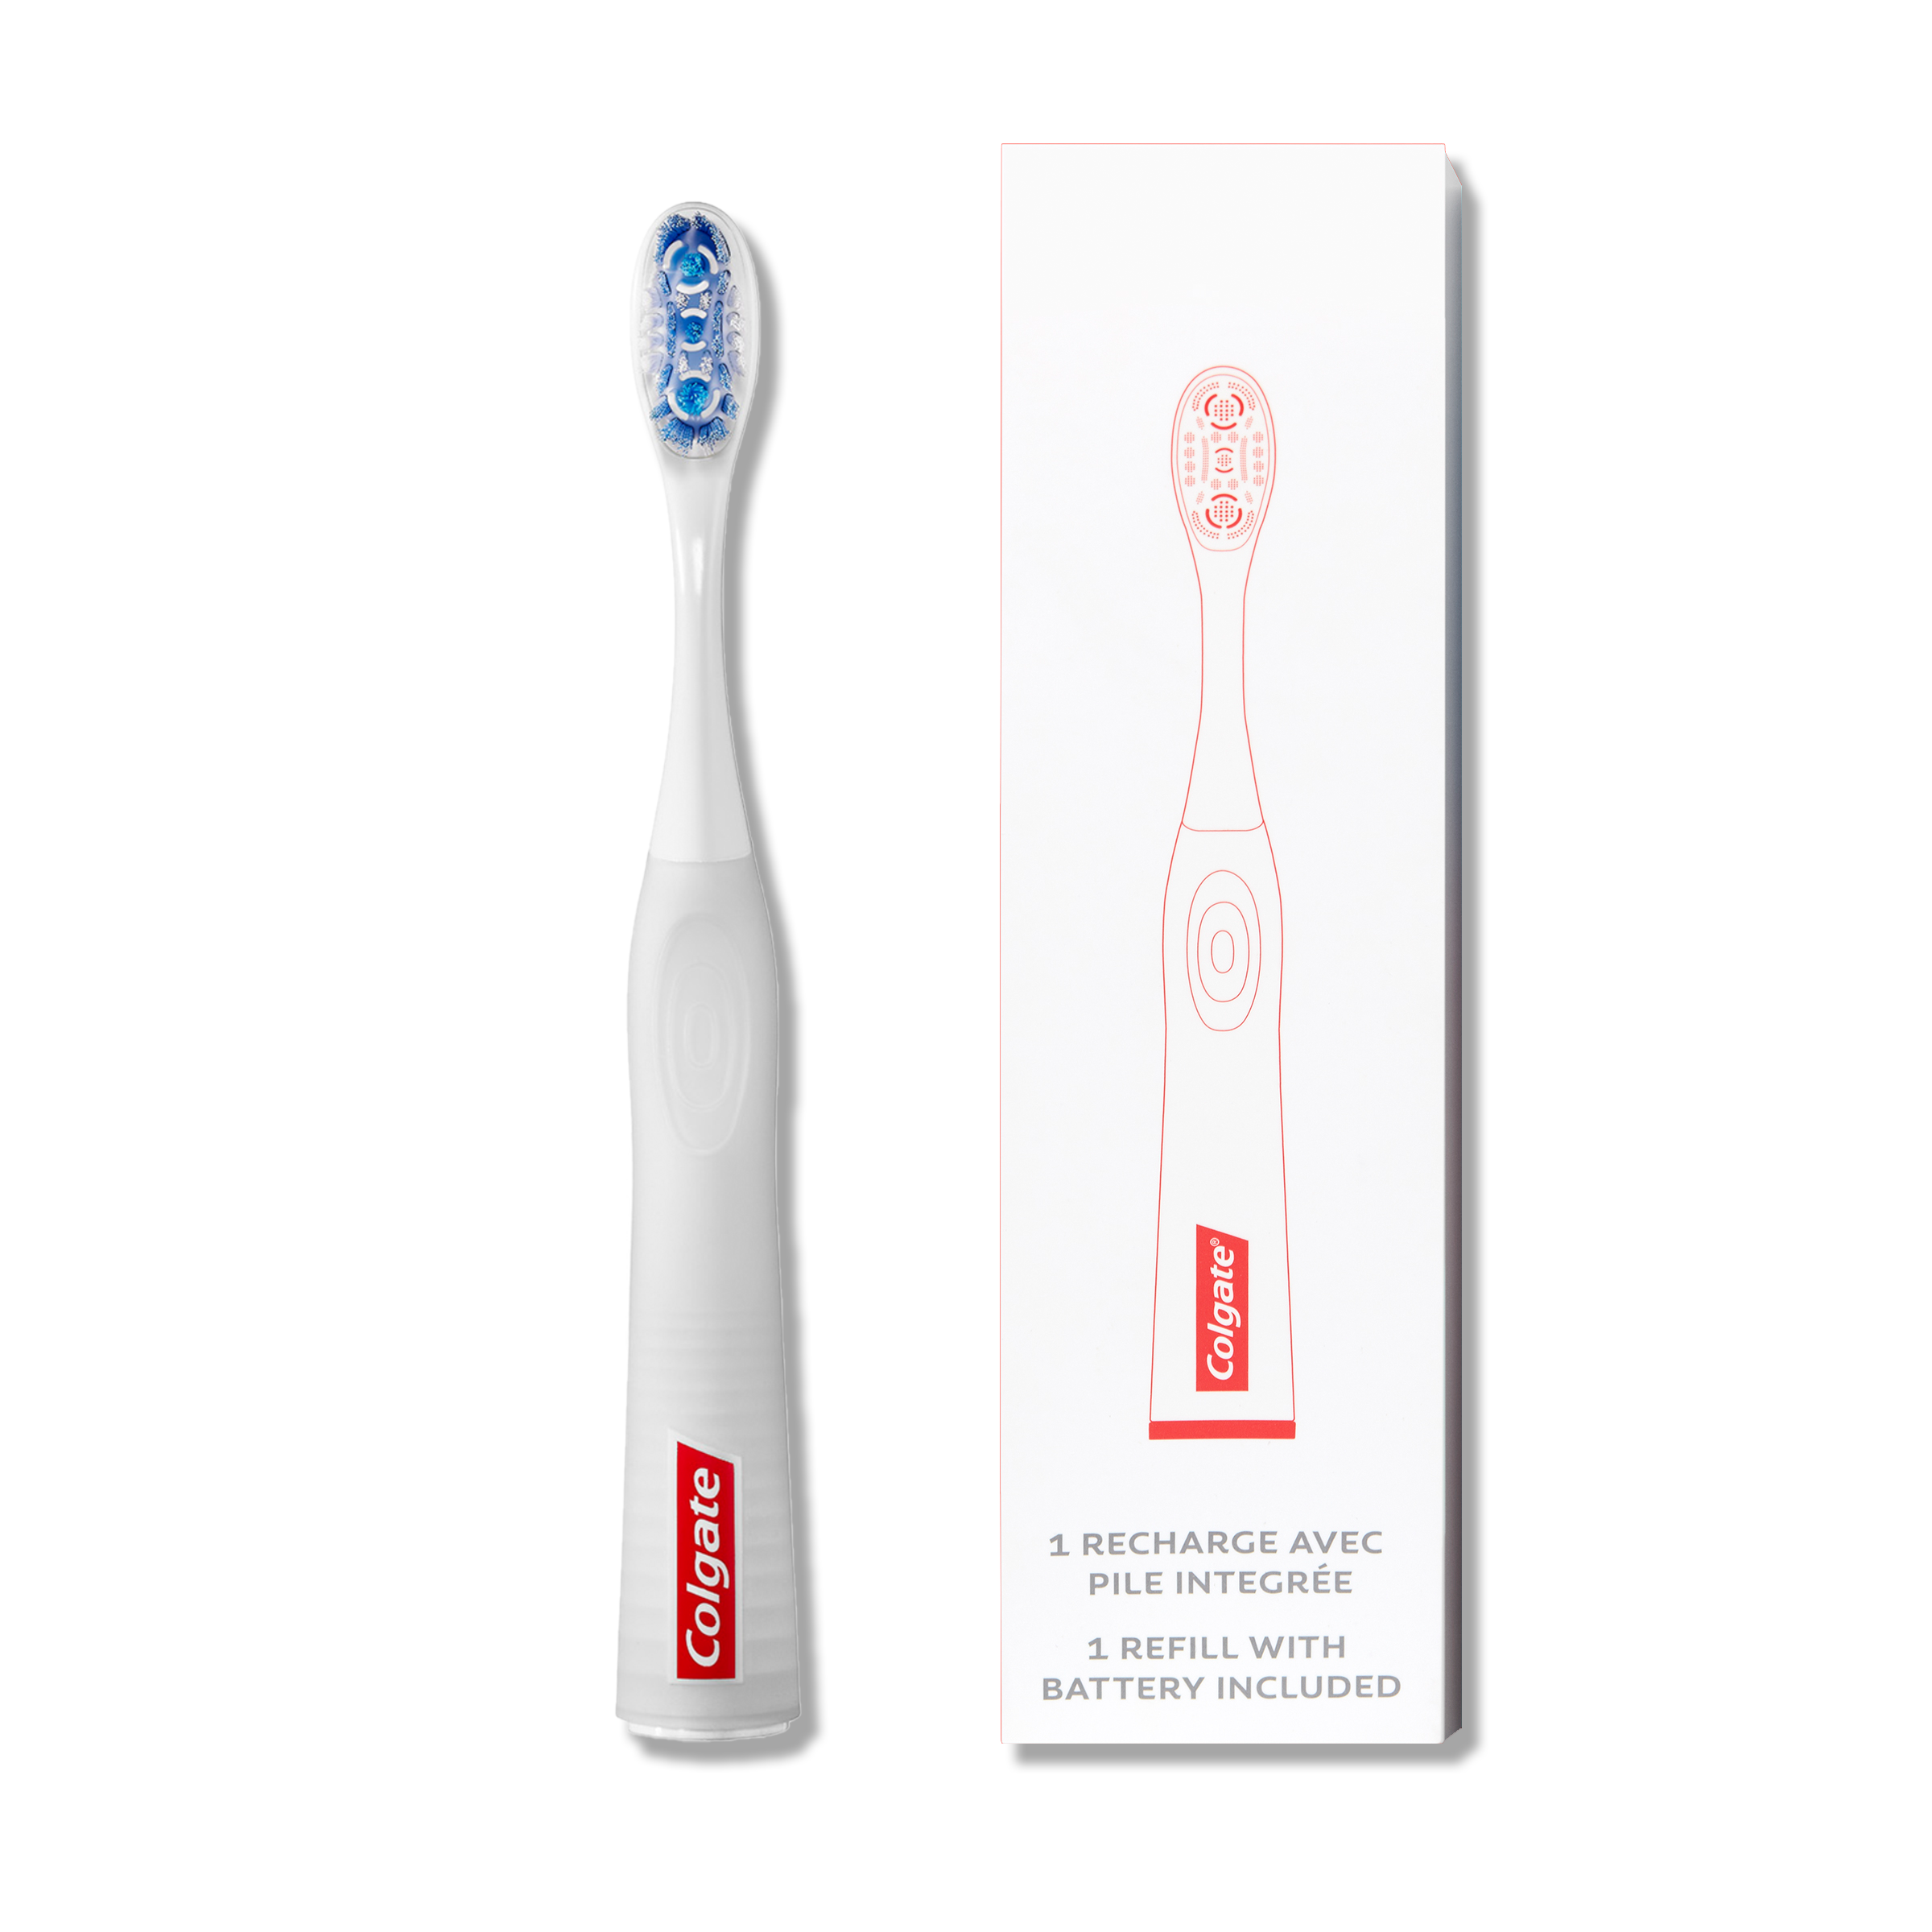 Colgate Smart Manual Toothbrush Replacement Brush Head